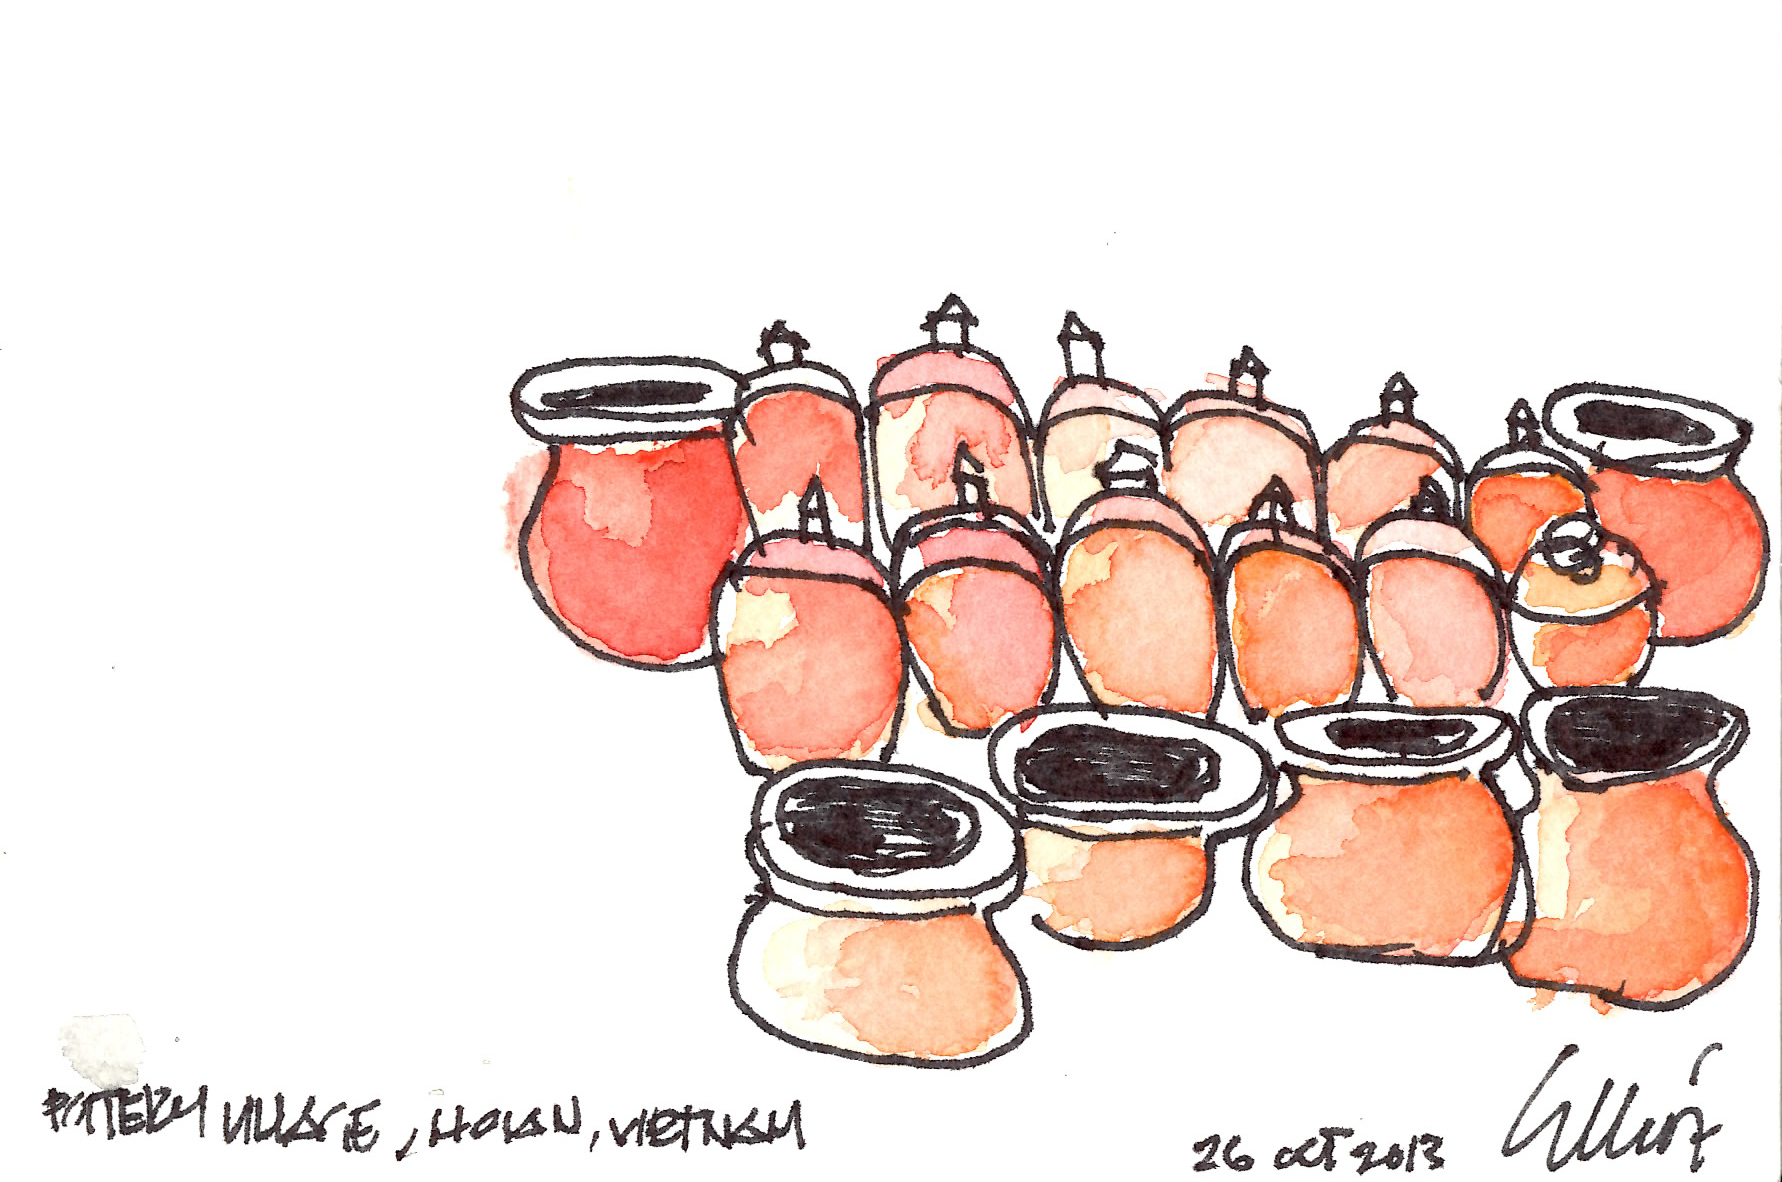  pottery village hoian 10.26.13 